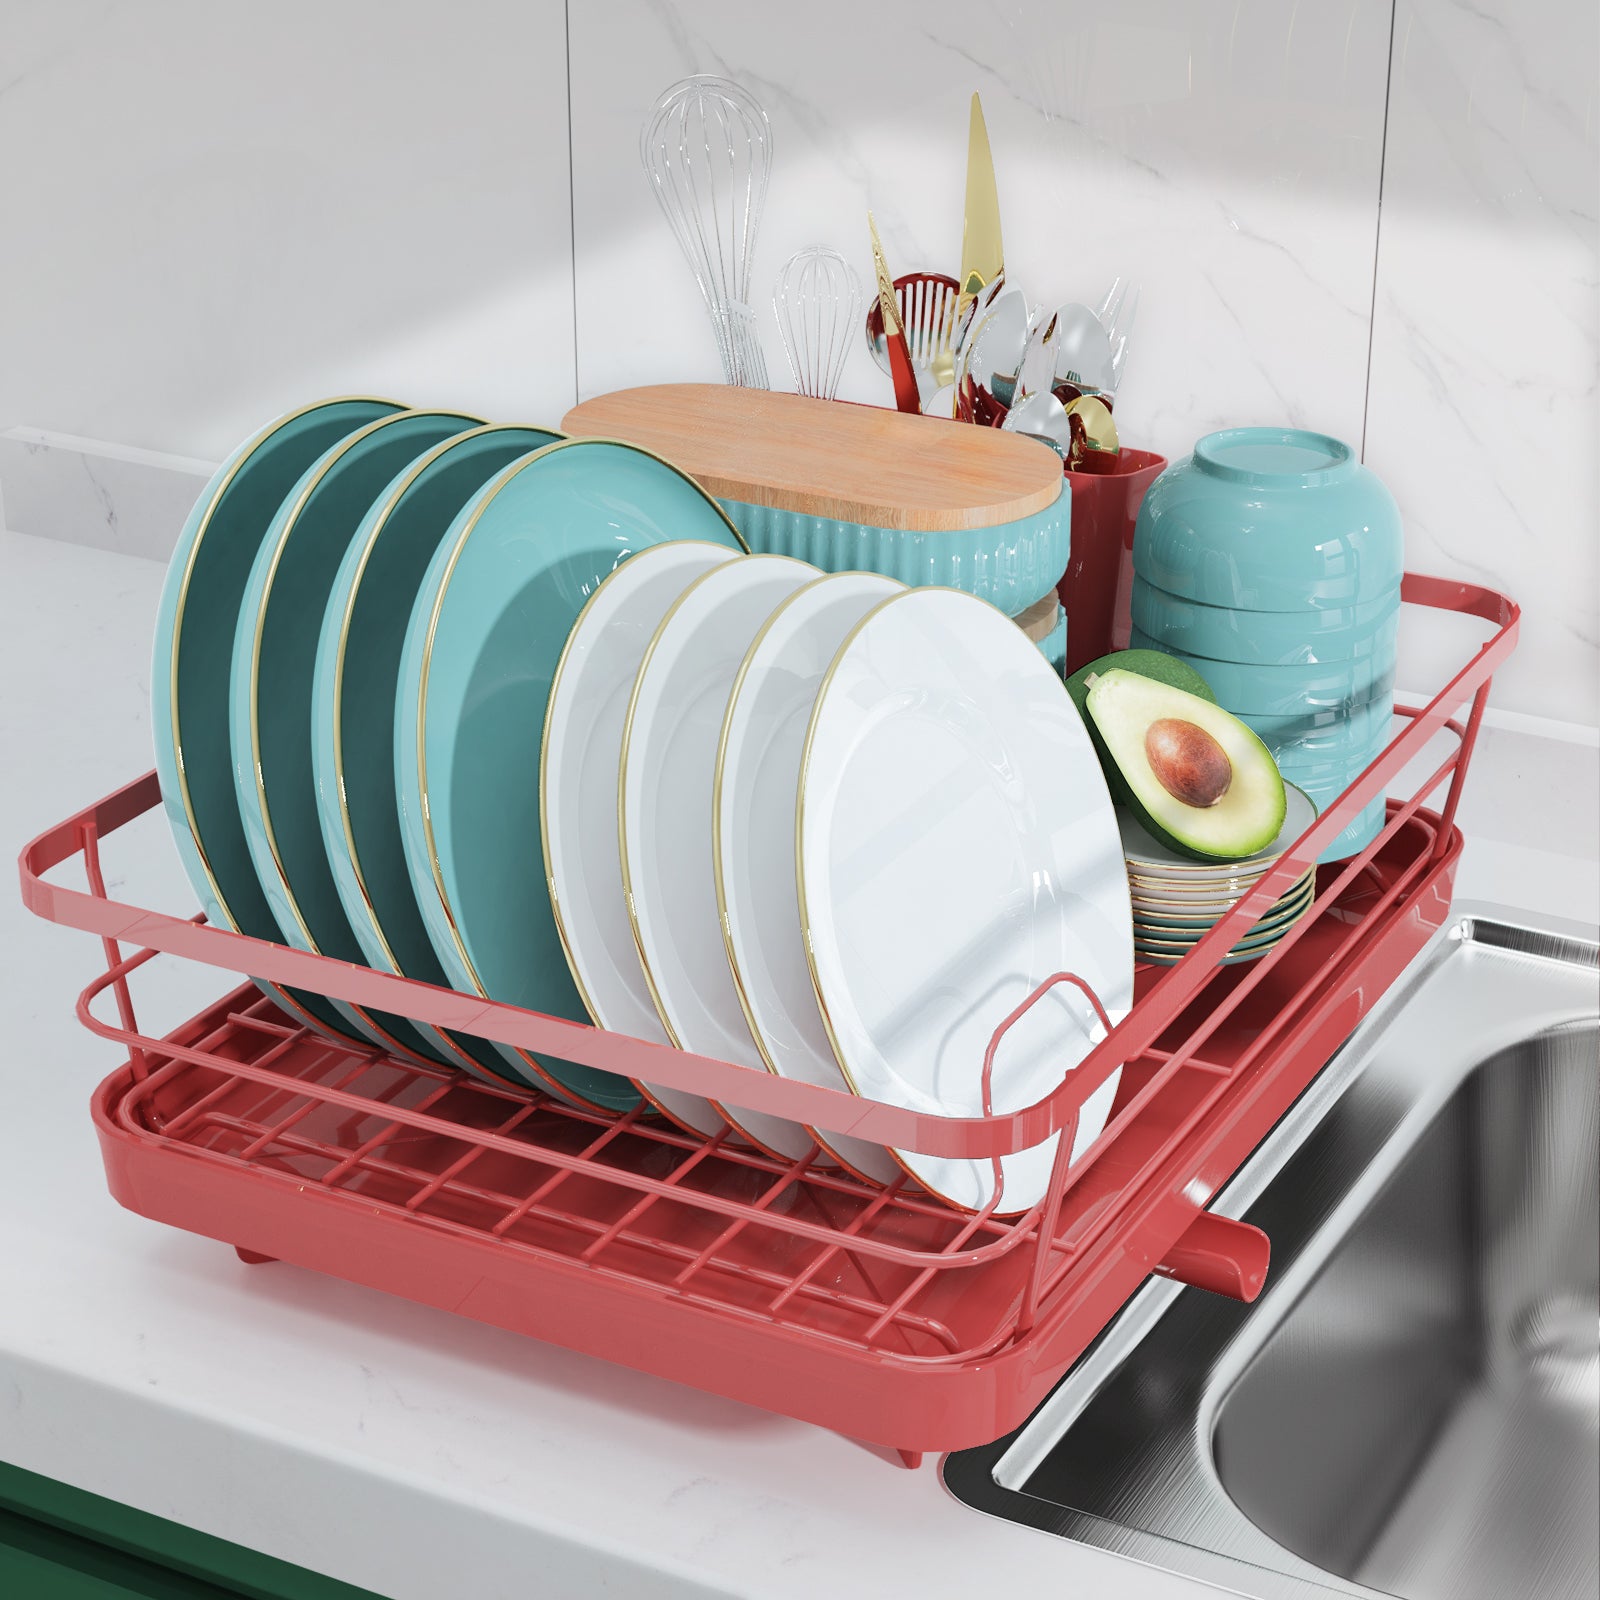 Sakugi Over The Sink Dish Drying Rack - Large Drying Rack w/Adjustable  Length 23.6-35.0, Space-Saving Dish Rack for Kitchen Counter,  Multifunctional